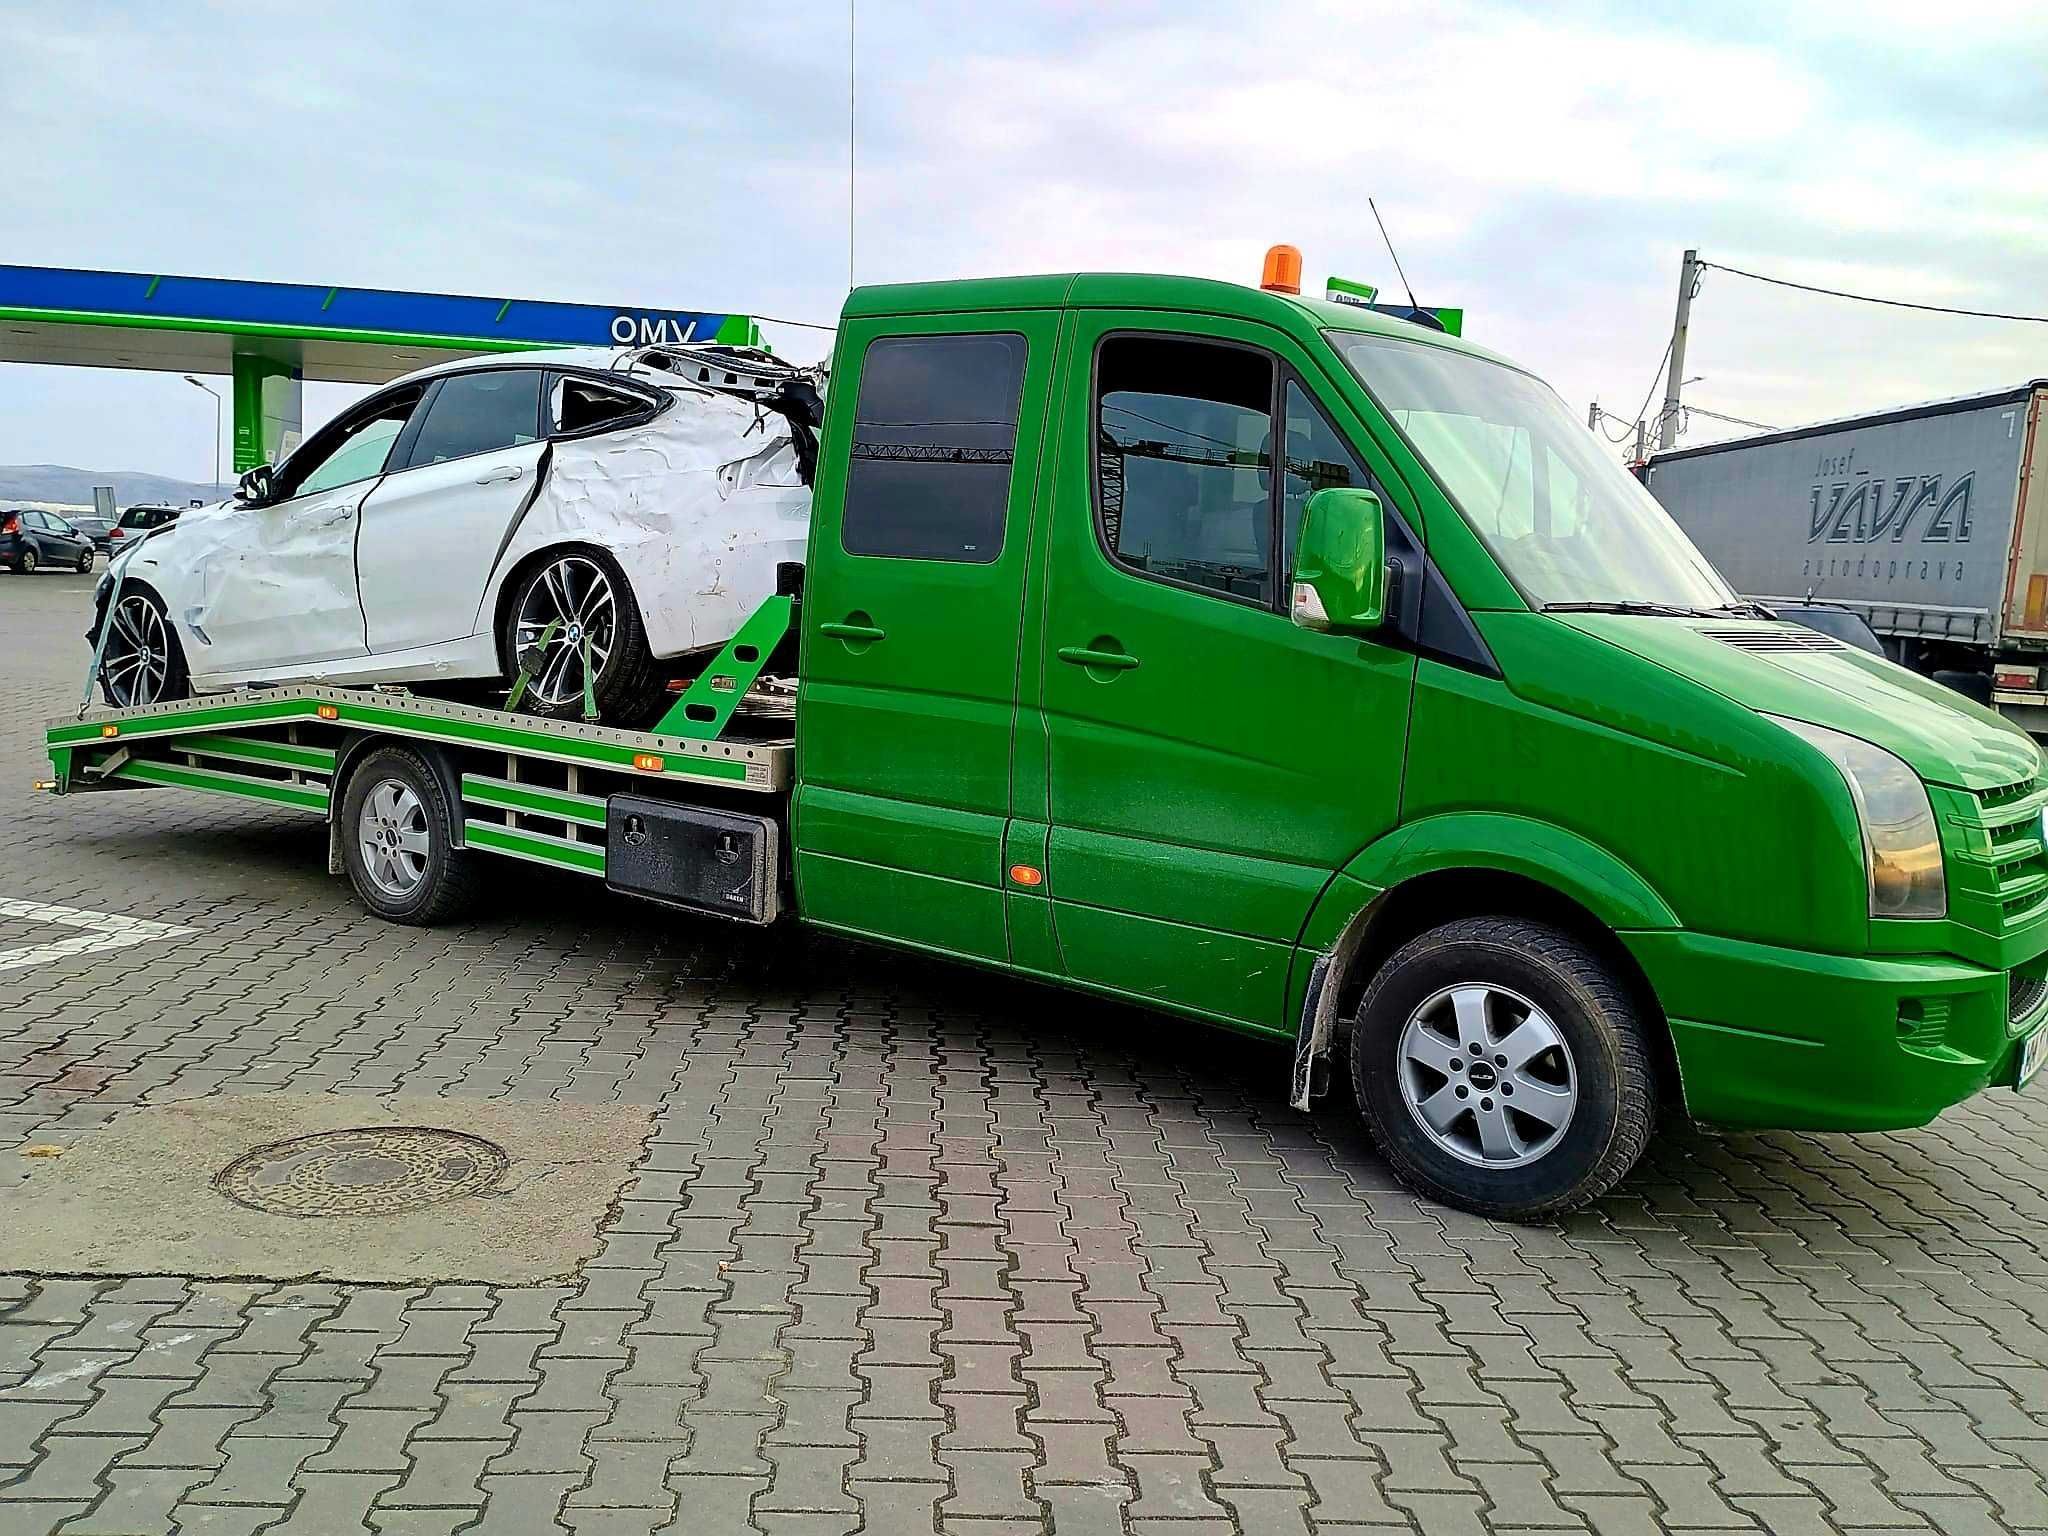 Tractari auto Cluj non-stop / Transport platforma / Asistenta accident